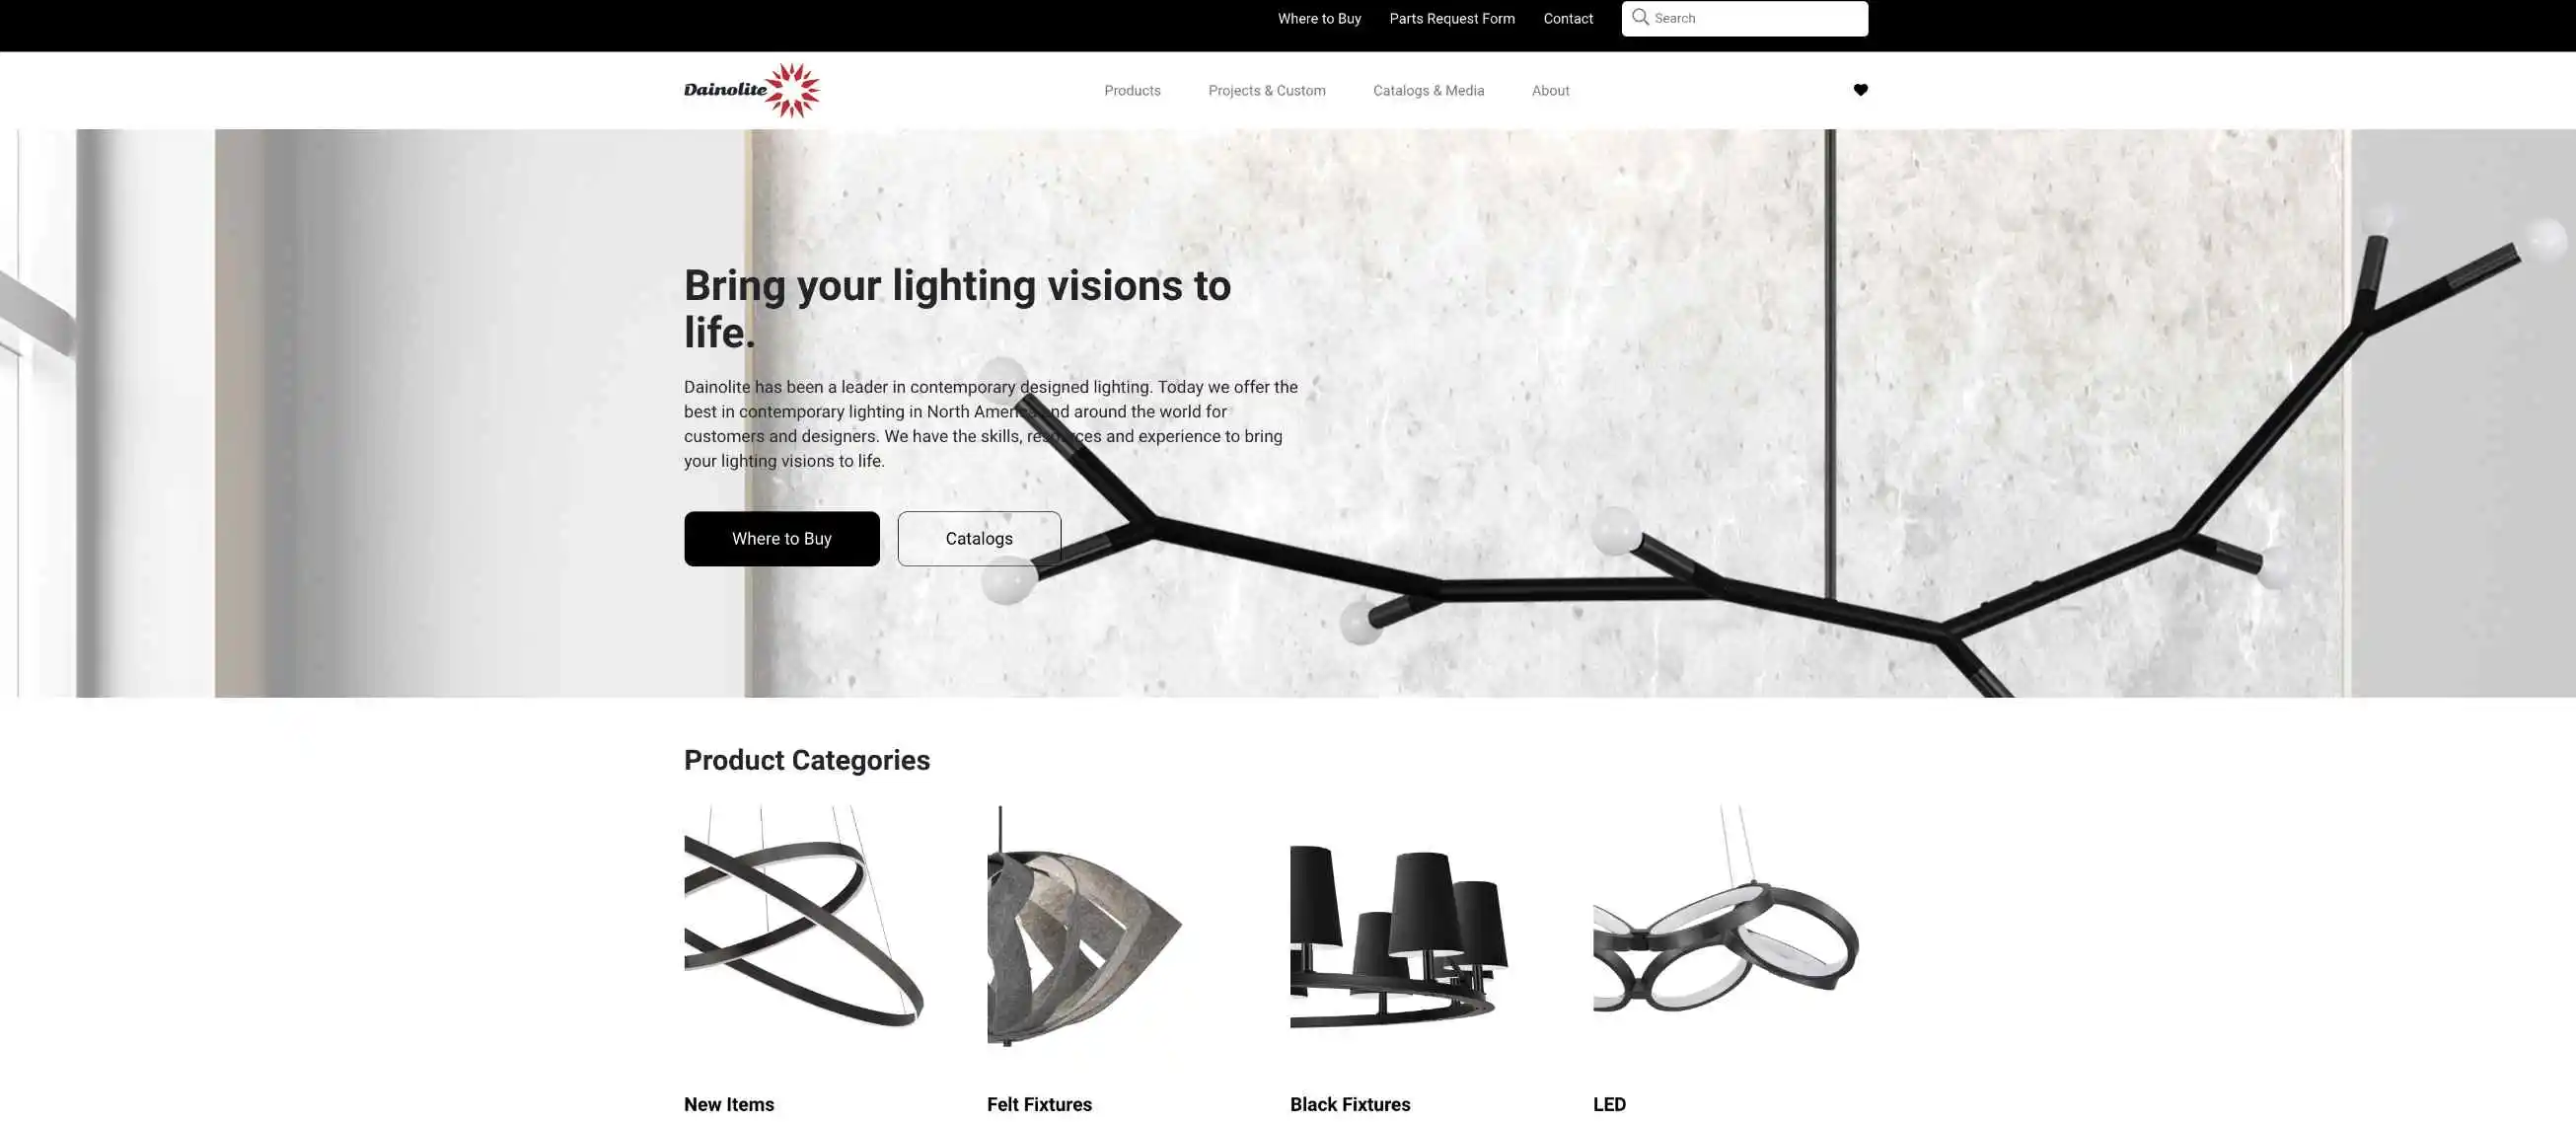 Website design for modern home by Dainolite company